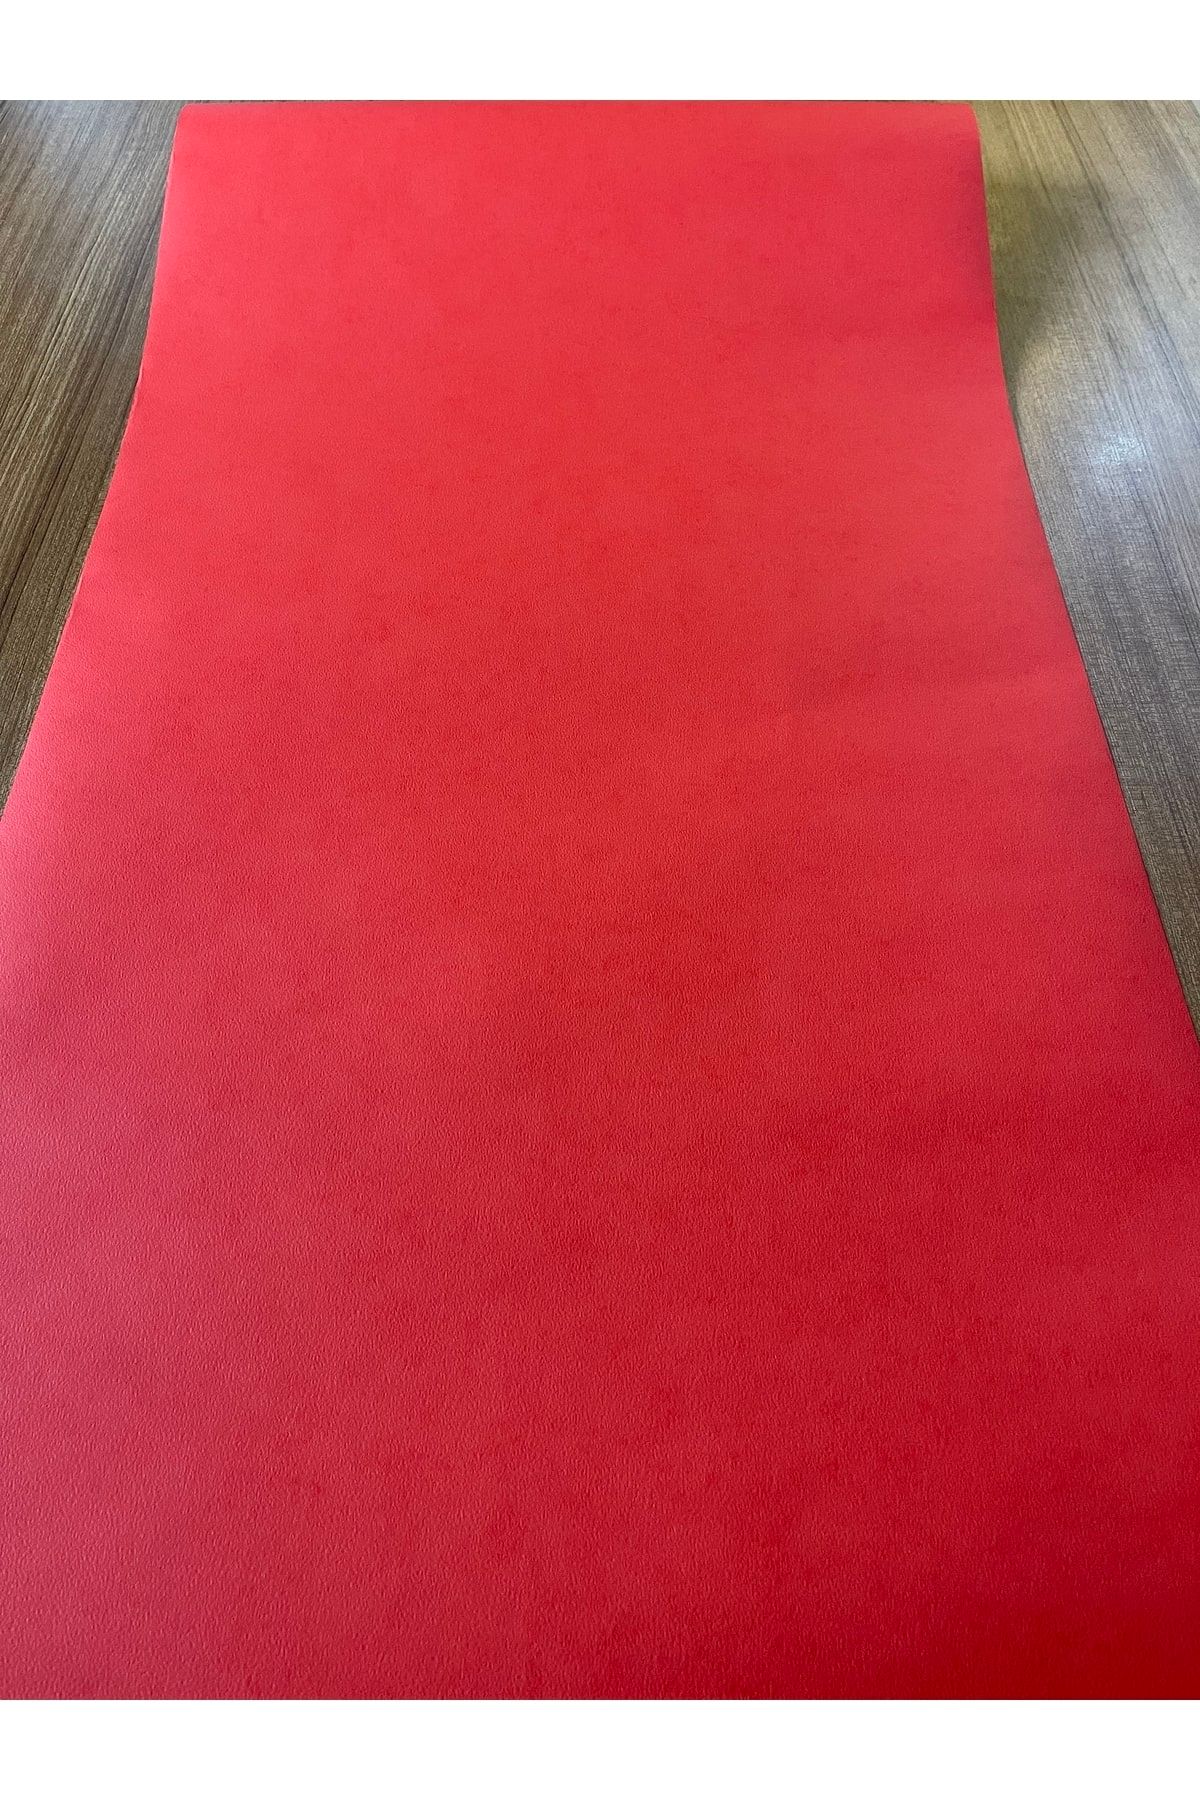 BAŞYAPI DİZAYN Kırmızı Ithal Duvar Kağıdı (5m²)